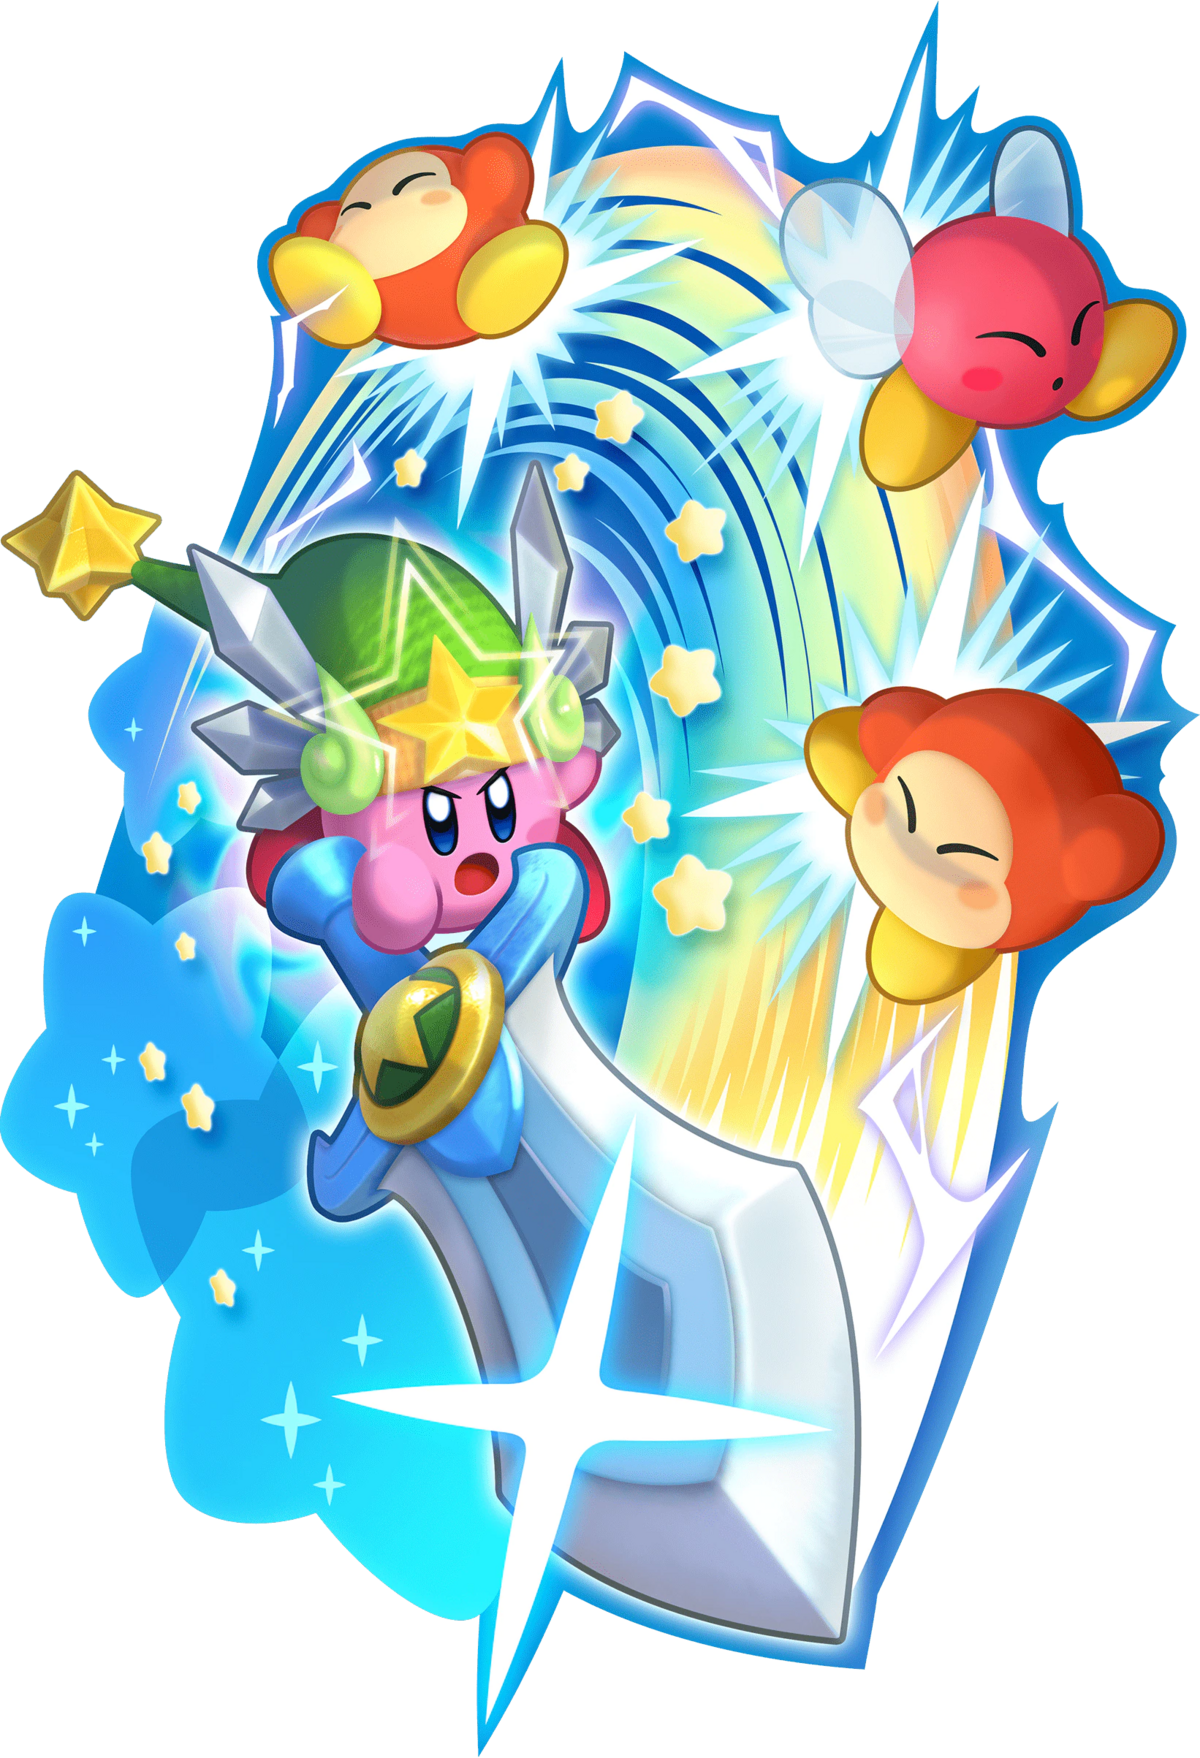 Ultra Sword - WiKirby: it's a wiki, about Kirby!